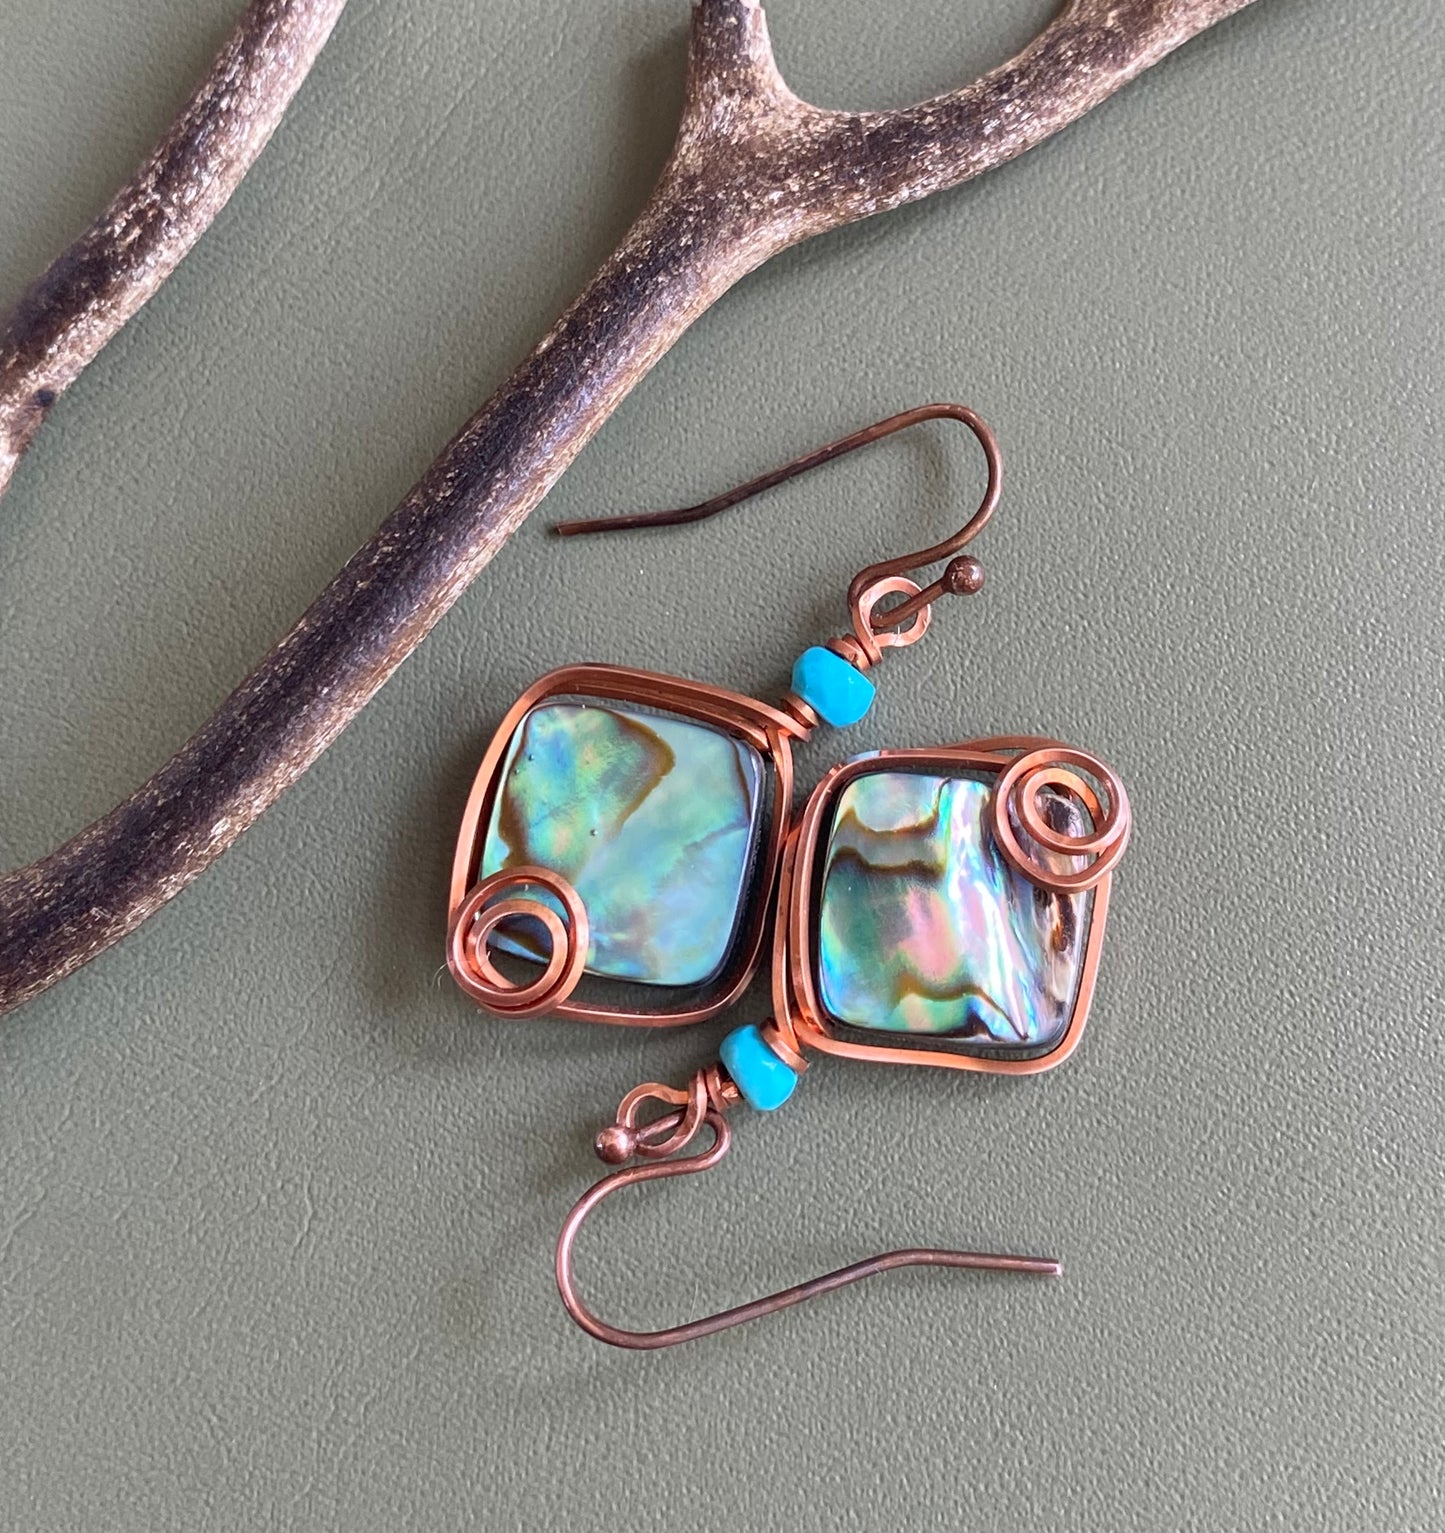 Abalone Earrings, Wire Wrapped Abalone Earrings in Antiqued Copper Wire, Abalone Paua Shell Earrings